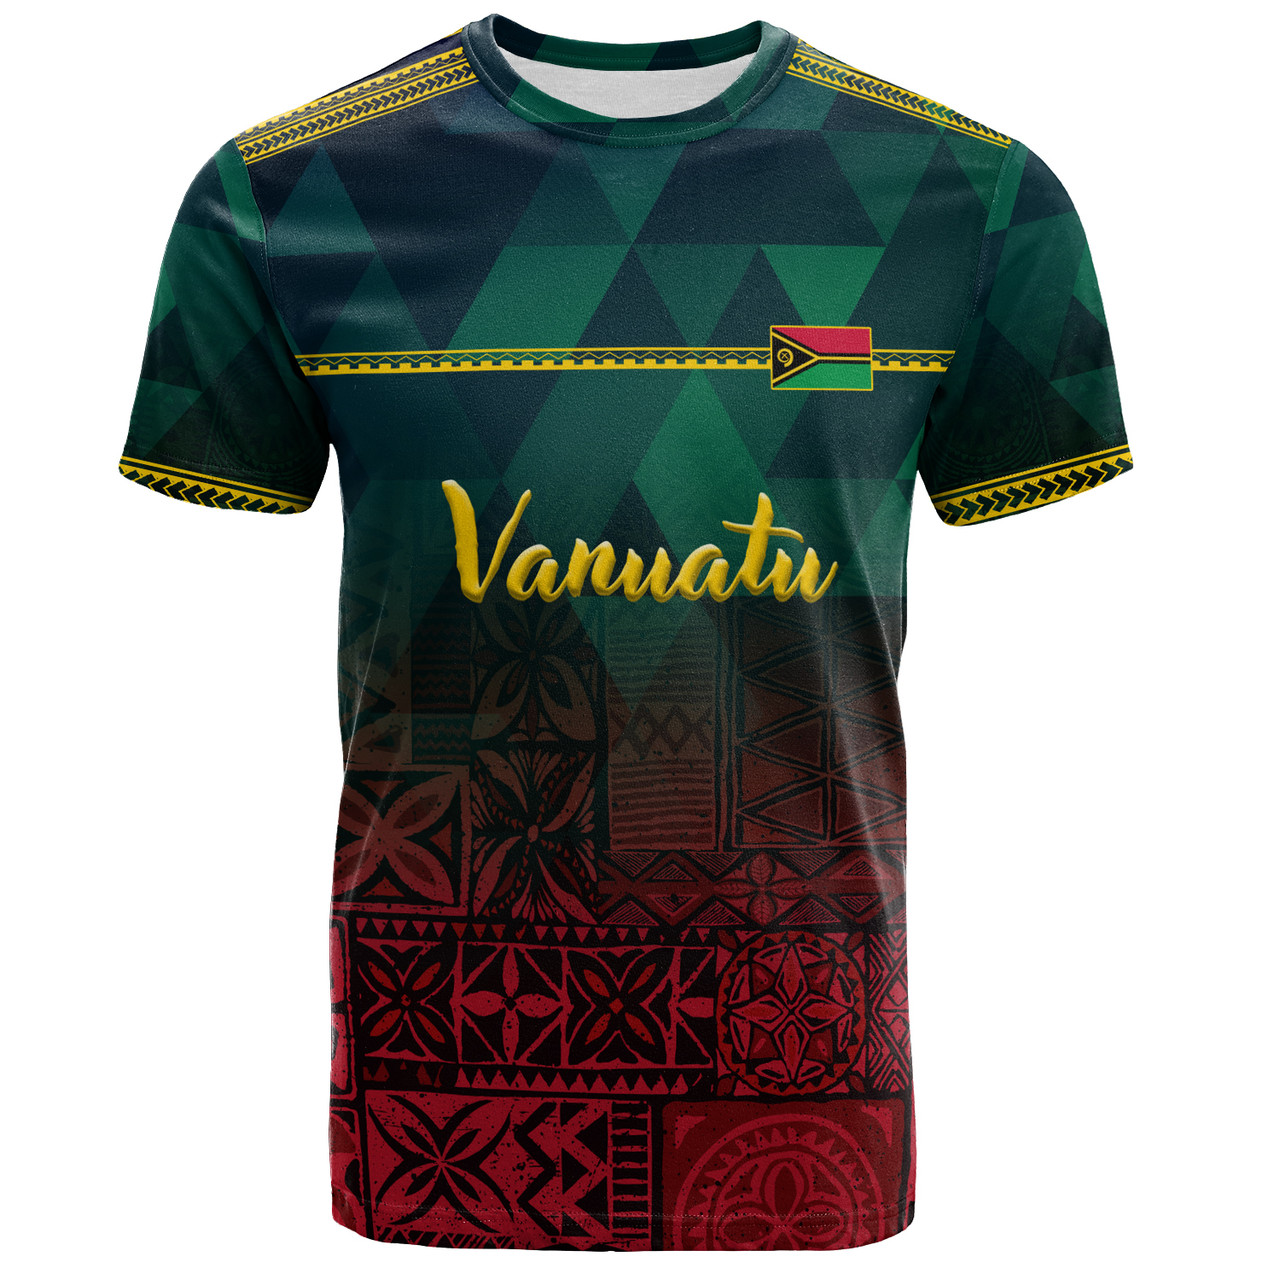 Vanuatu T-Shirt Lowpolly Pattern with Polynesian Motif